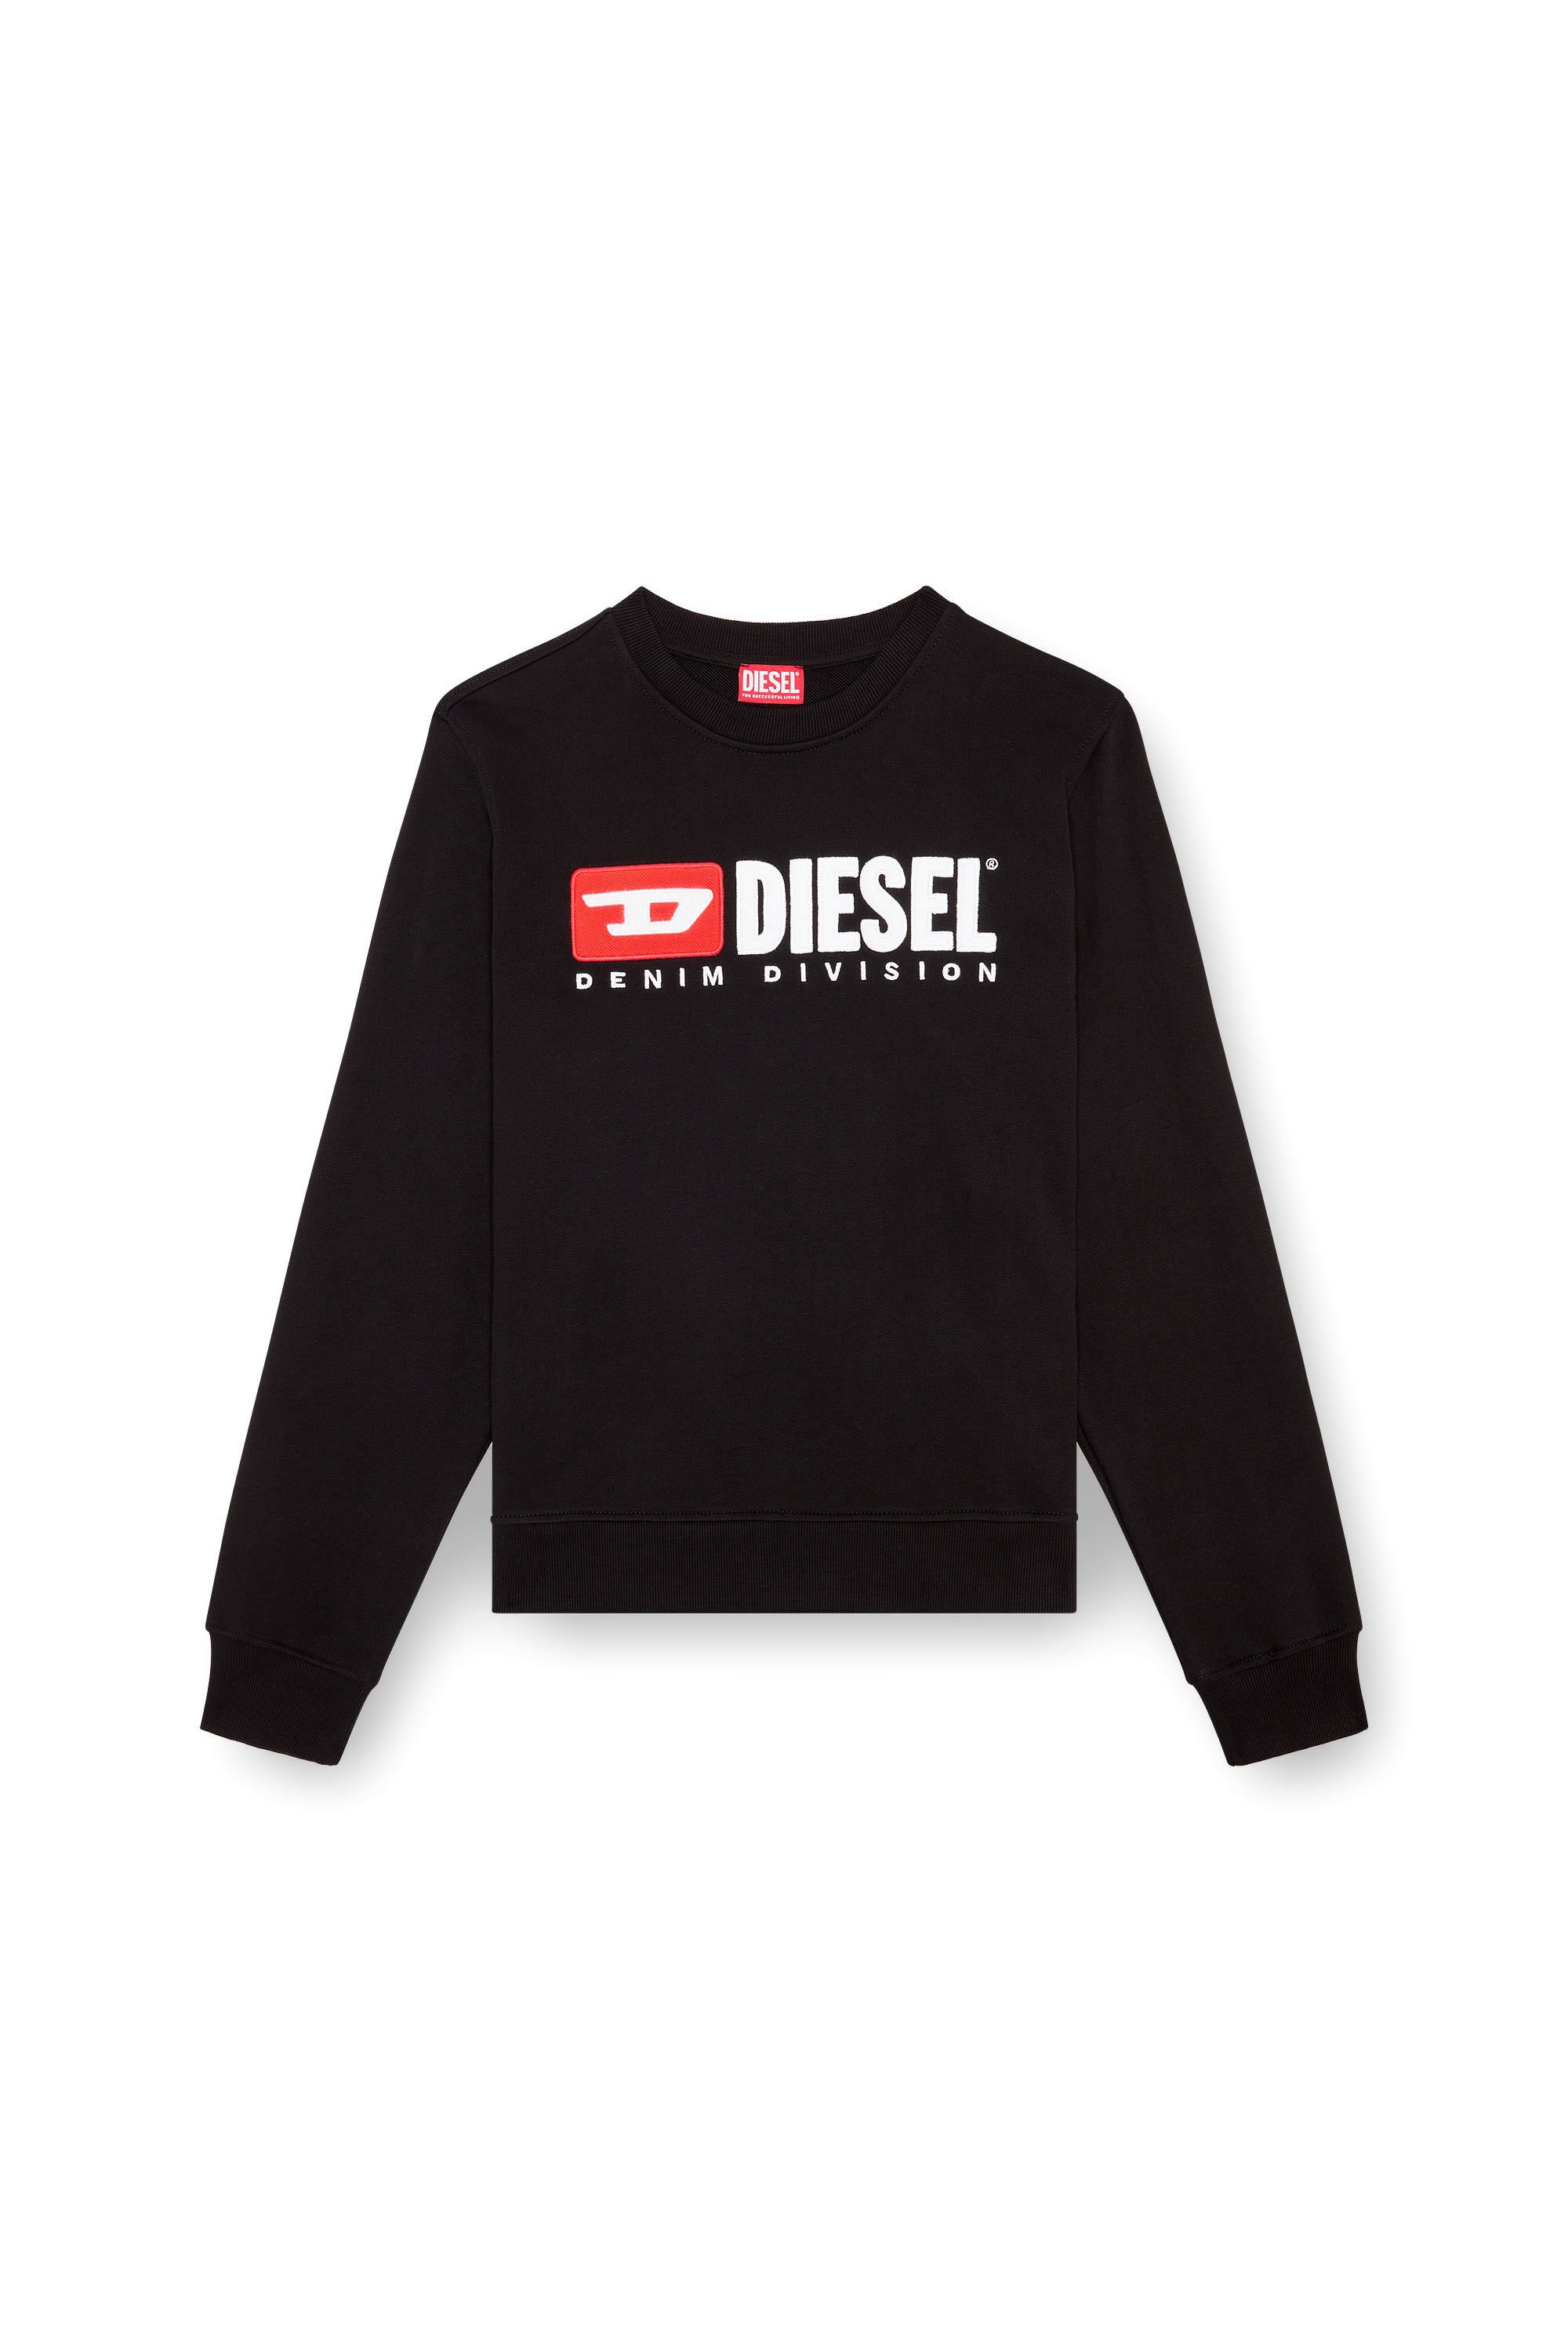 Diesel - S-BOXT-DIV, Homme Sweat-shirt avec logo Denim Division in Noir - Image 2